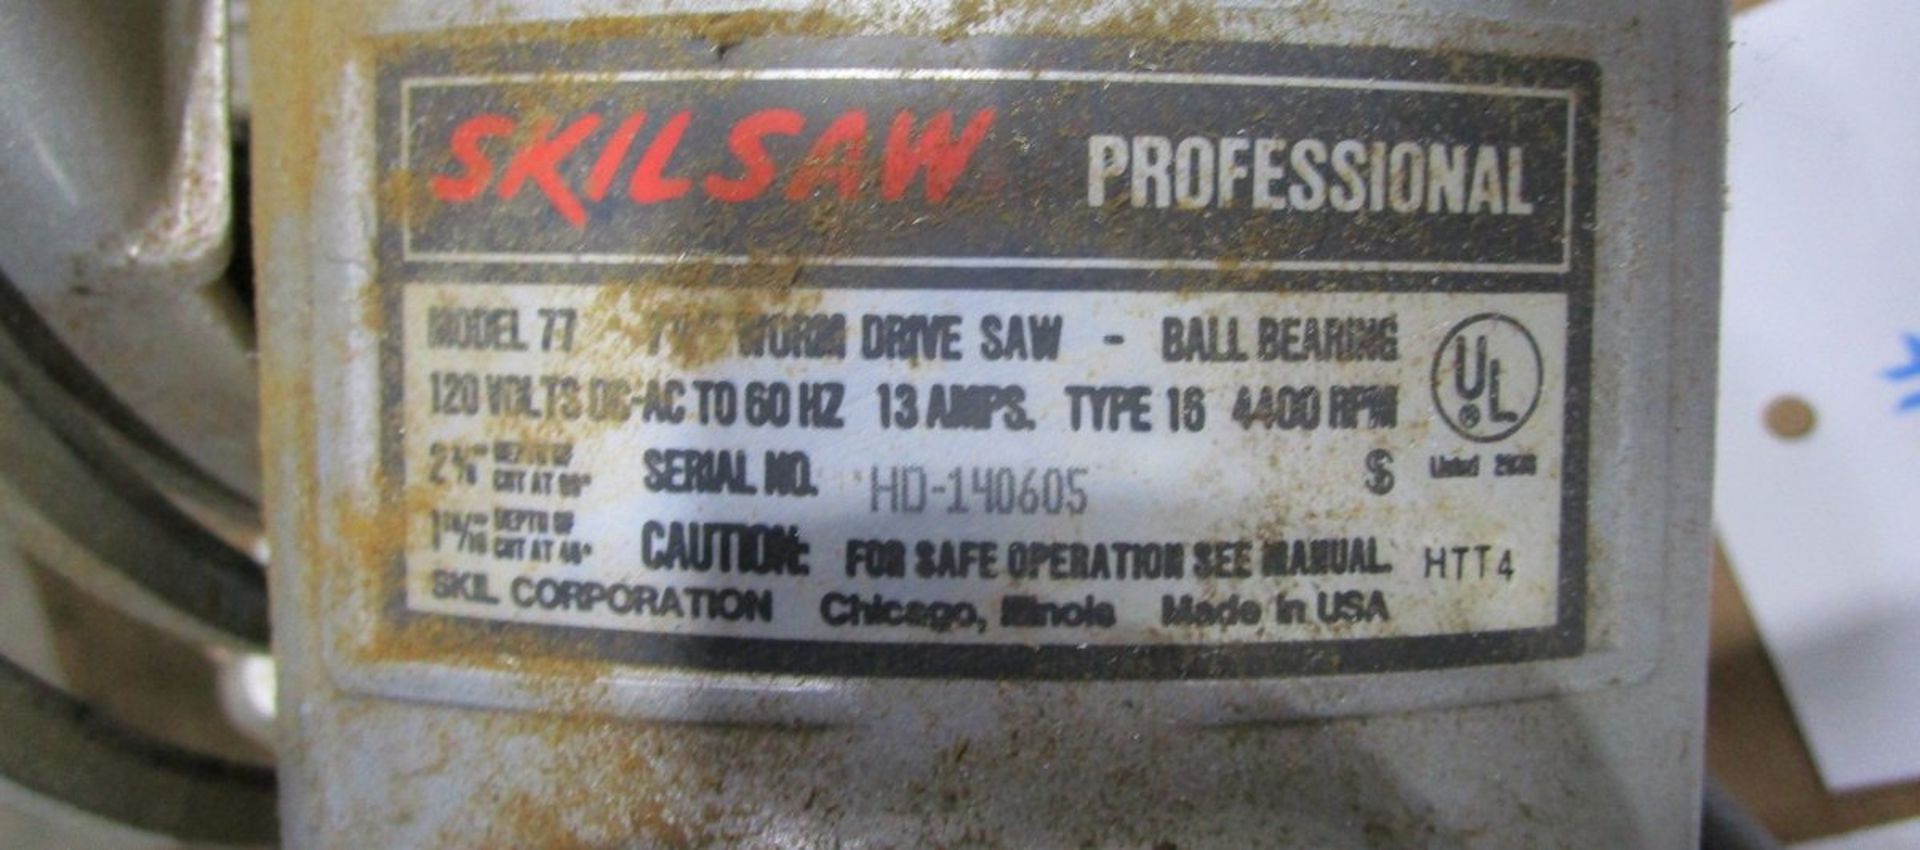 Skilsaw 77 Worm Drive Saw, S/N HD-140605 - Image 3 of 3